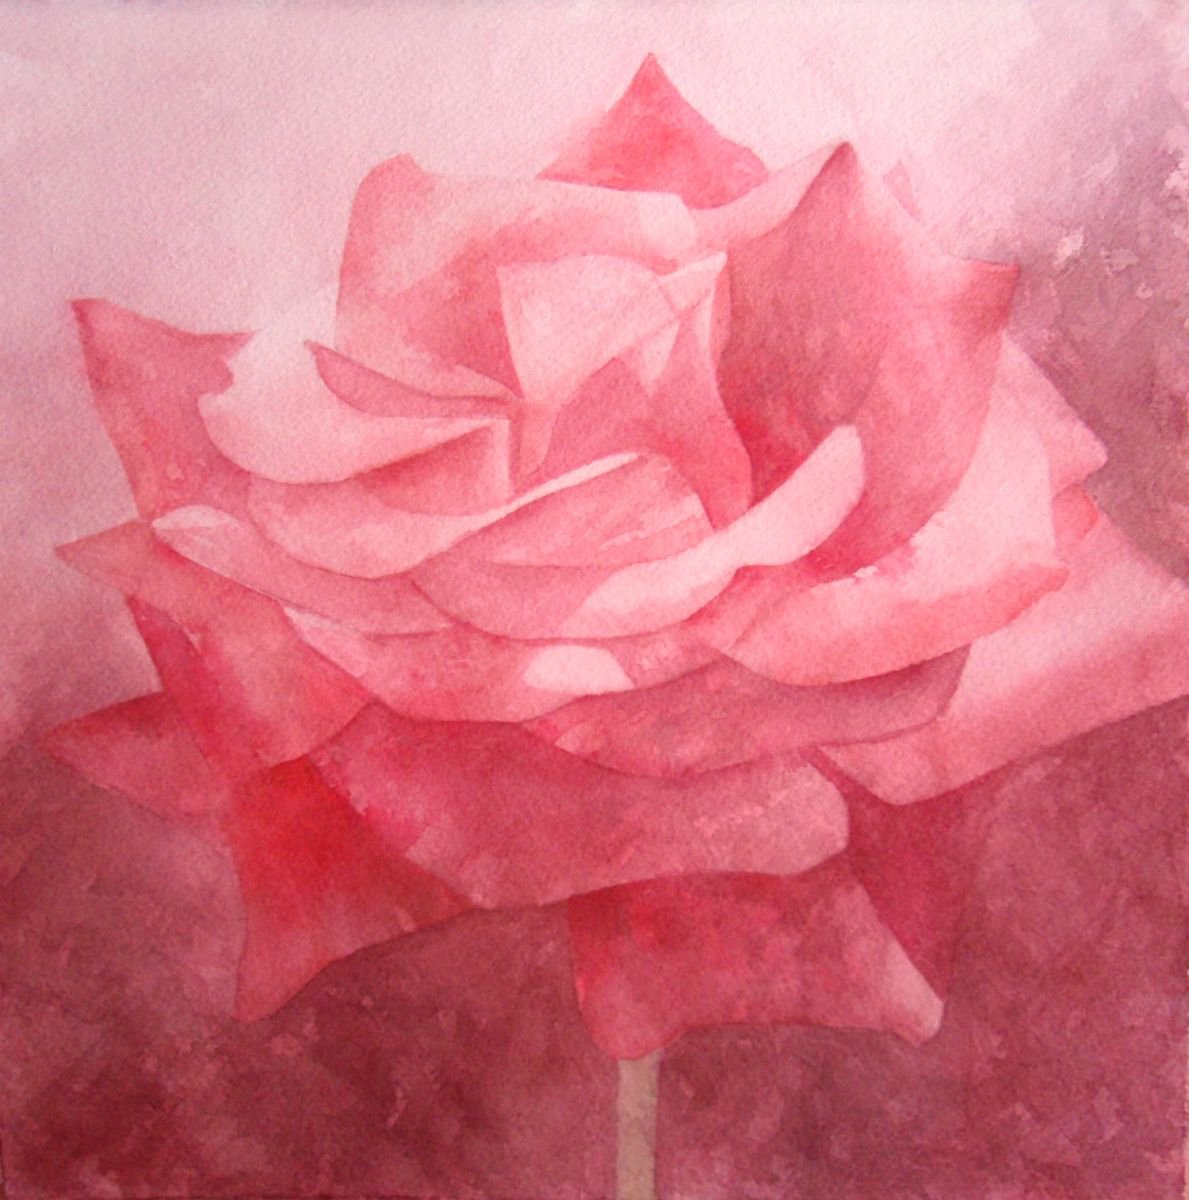 Red rose by Natalia Salinas Mariscal